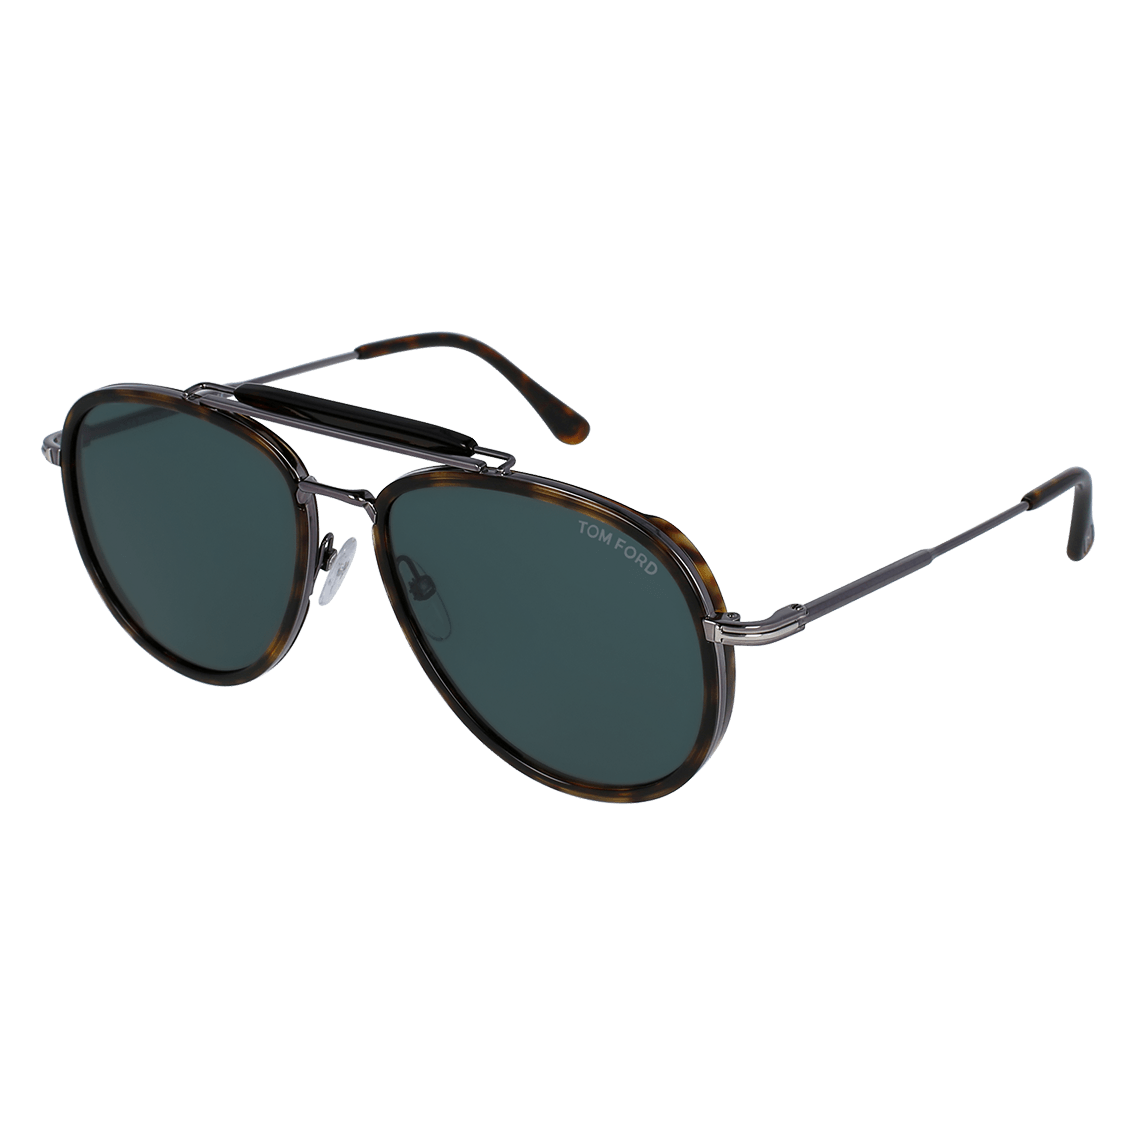 Tom Ford Sunglasses Tom Ford Sunglasses FT0666 52N 60mm Tripp Eyeglasses Eyewear UK USA Australia 